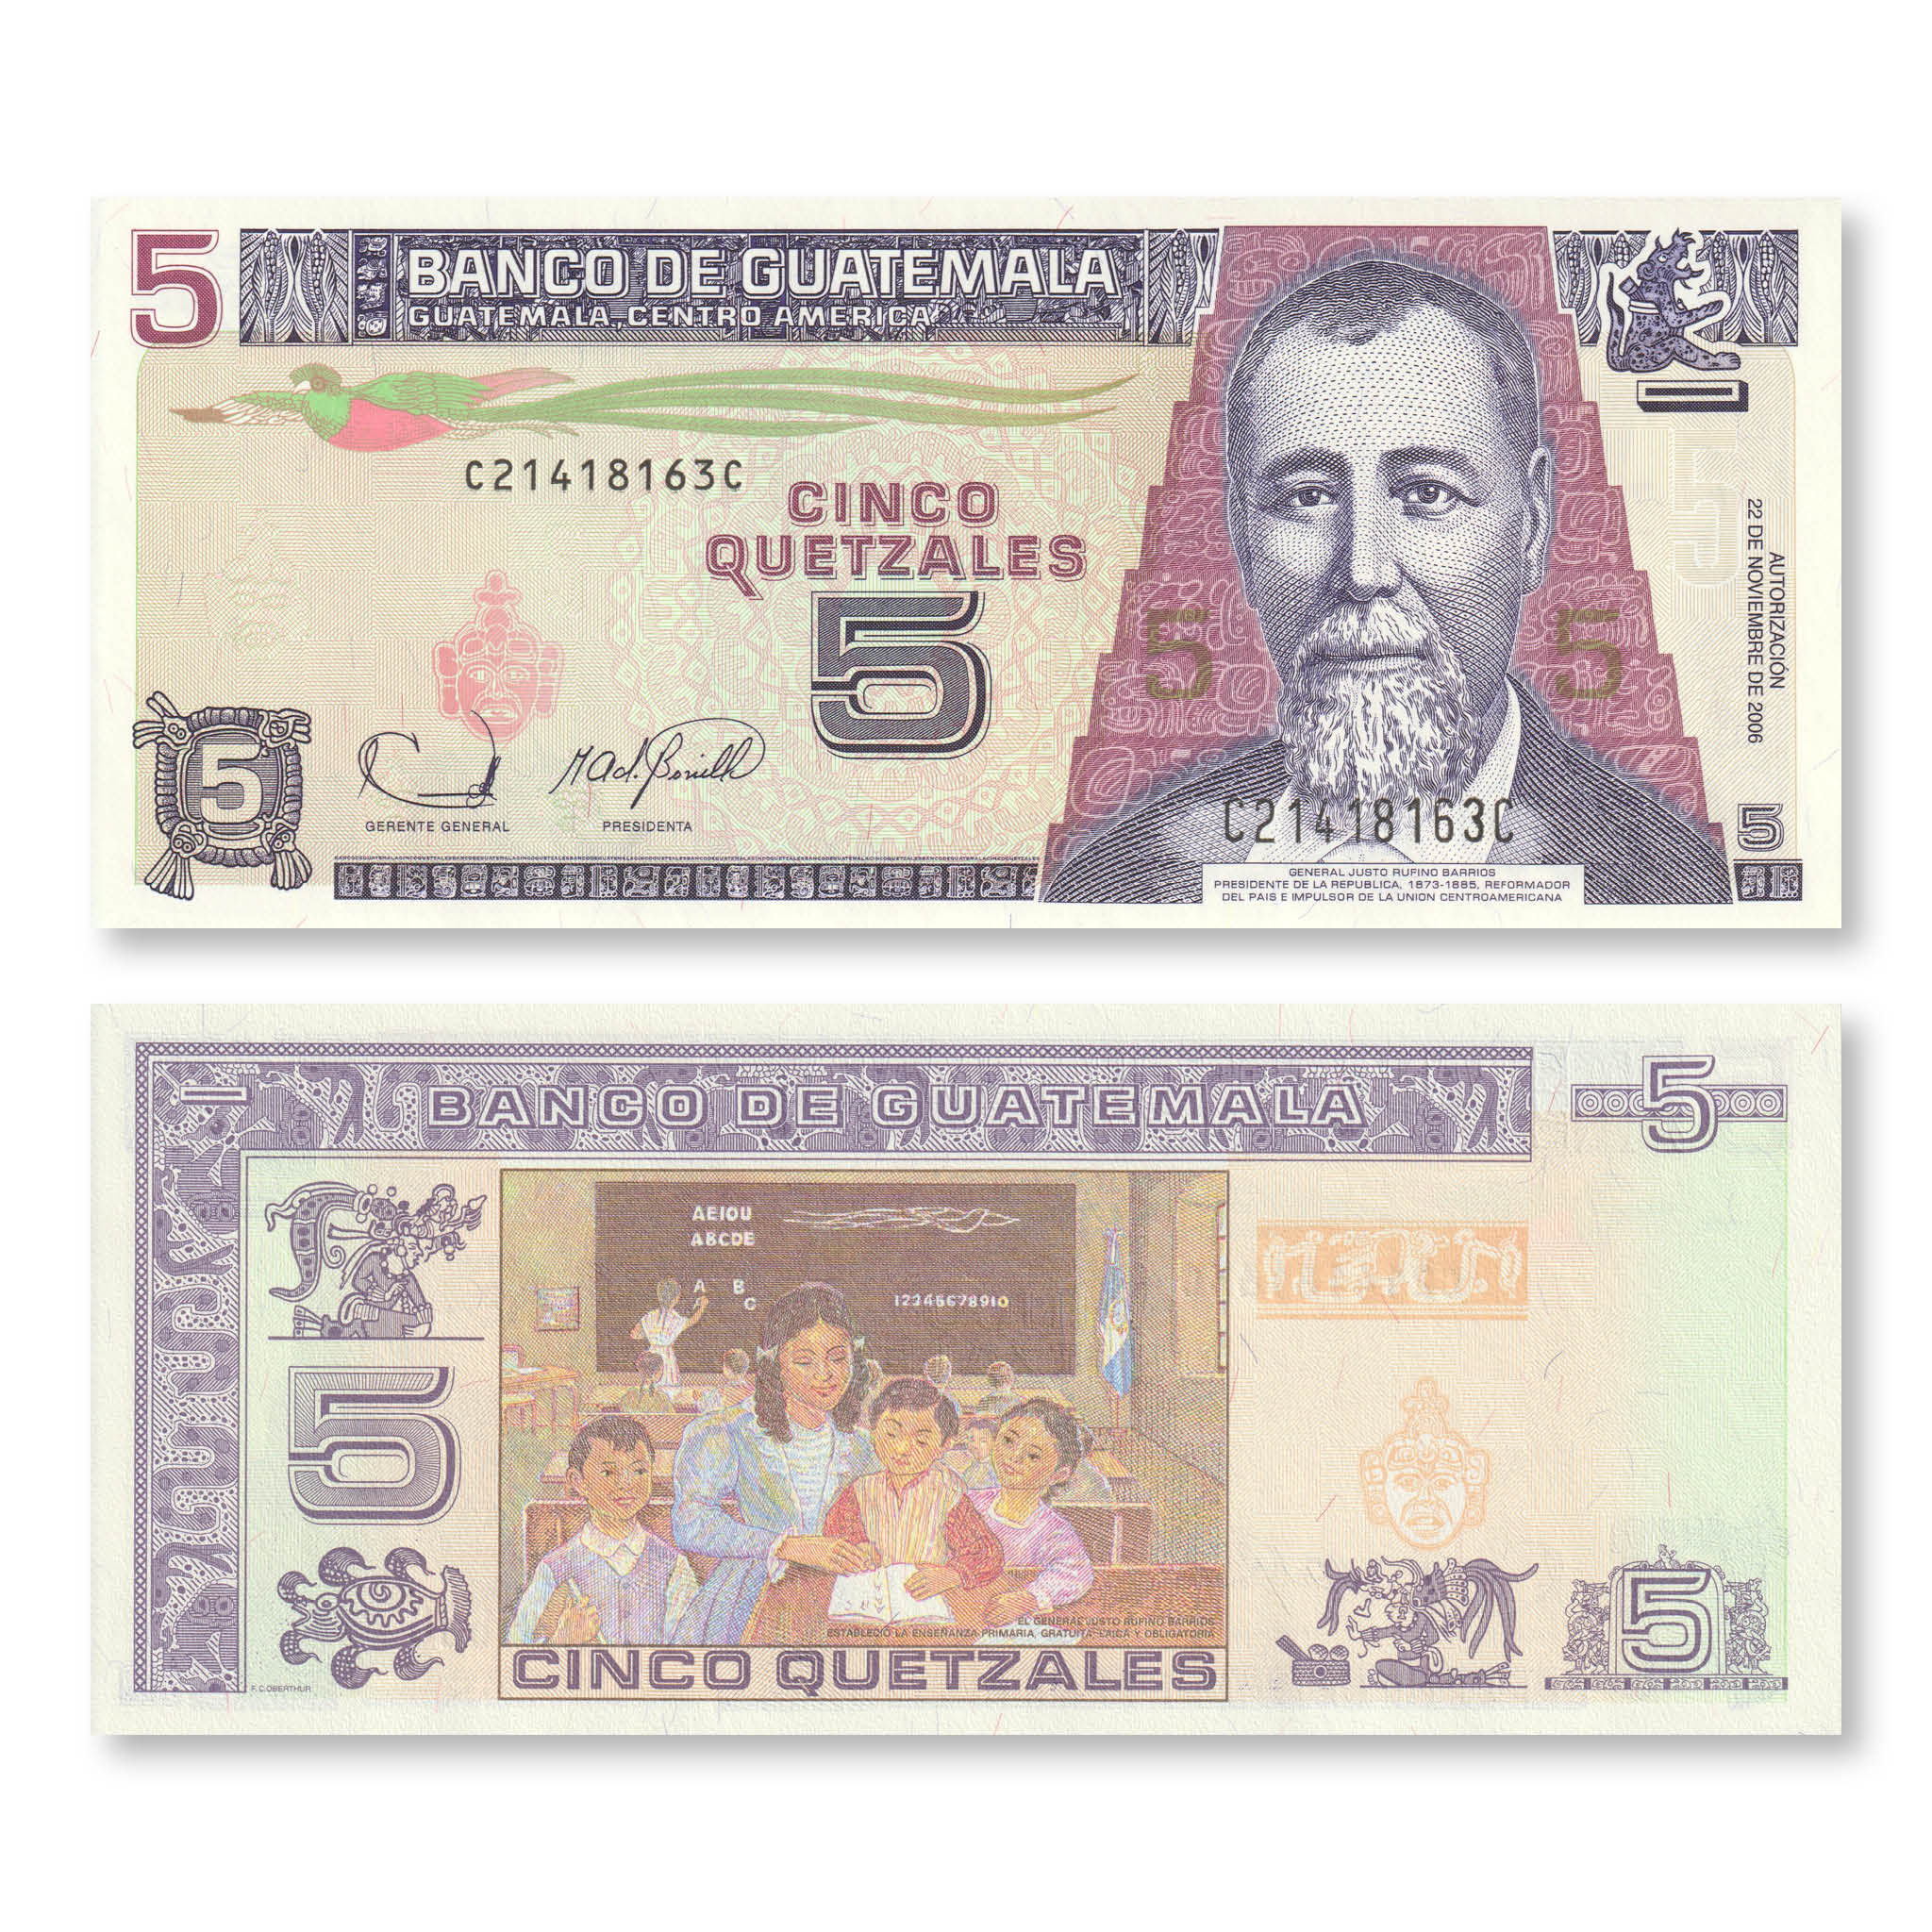 Guatemala 5 Quetzales, 2020, B605d, UNC - Robert's World Money - World Banknotes